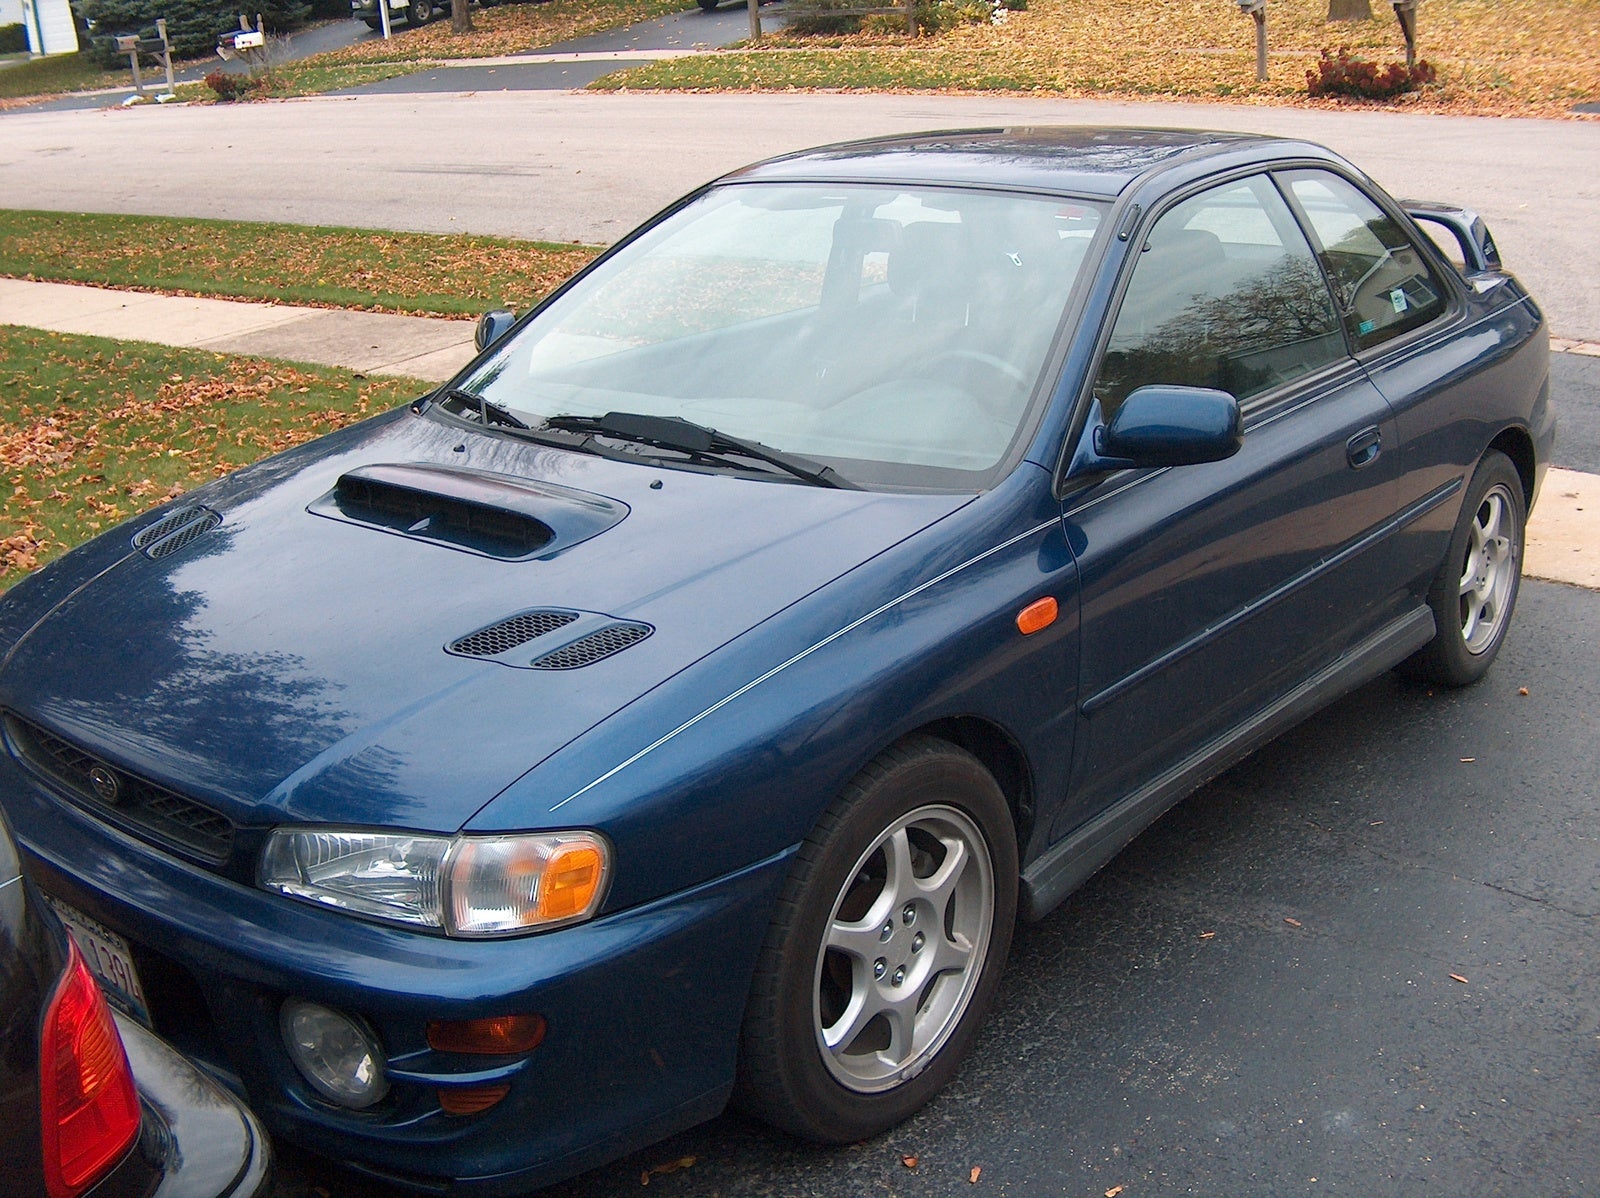 2001 Subaru Impreza 2.5 Rs 2001 Subaru Impreza